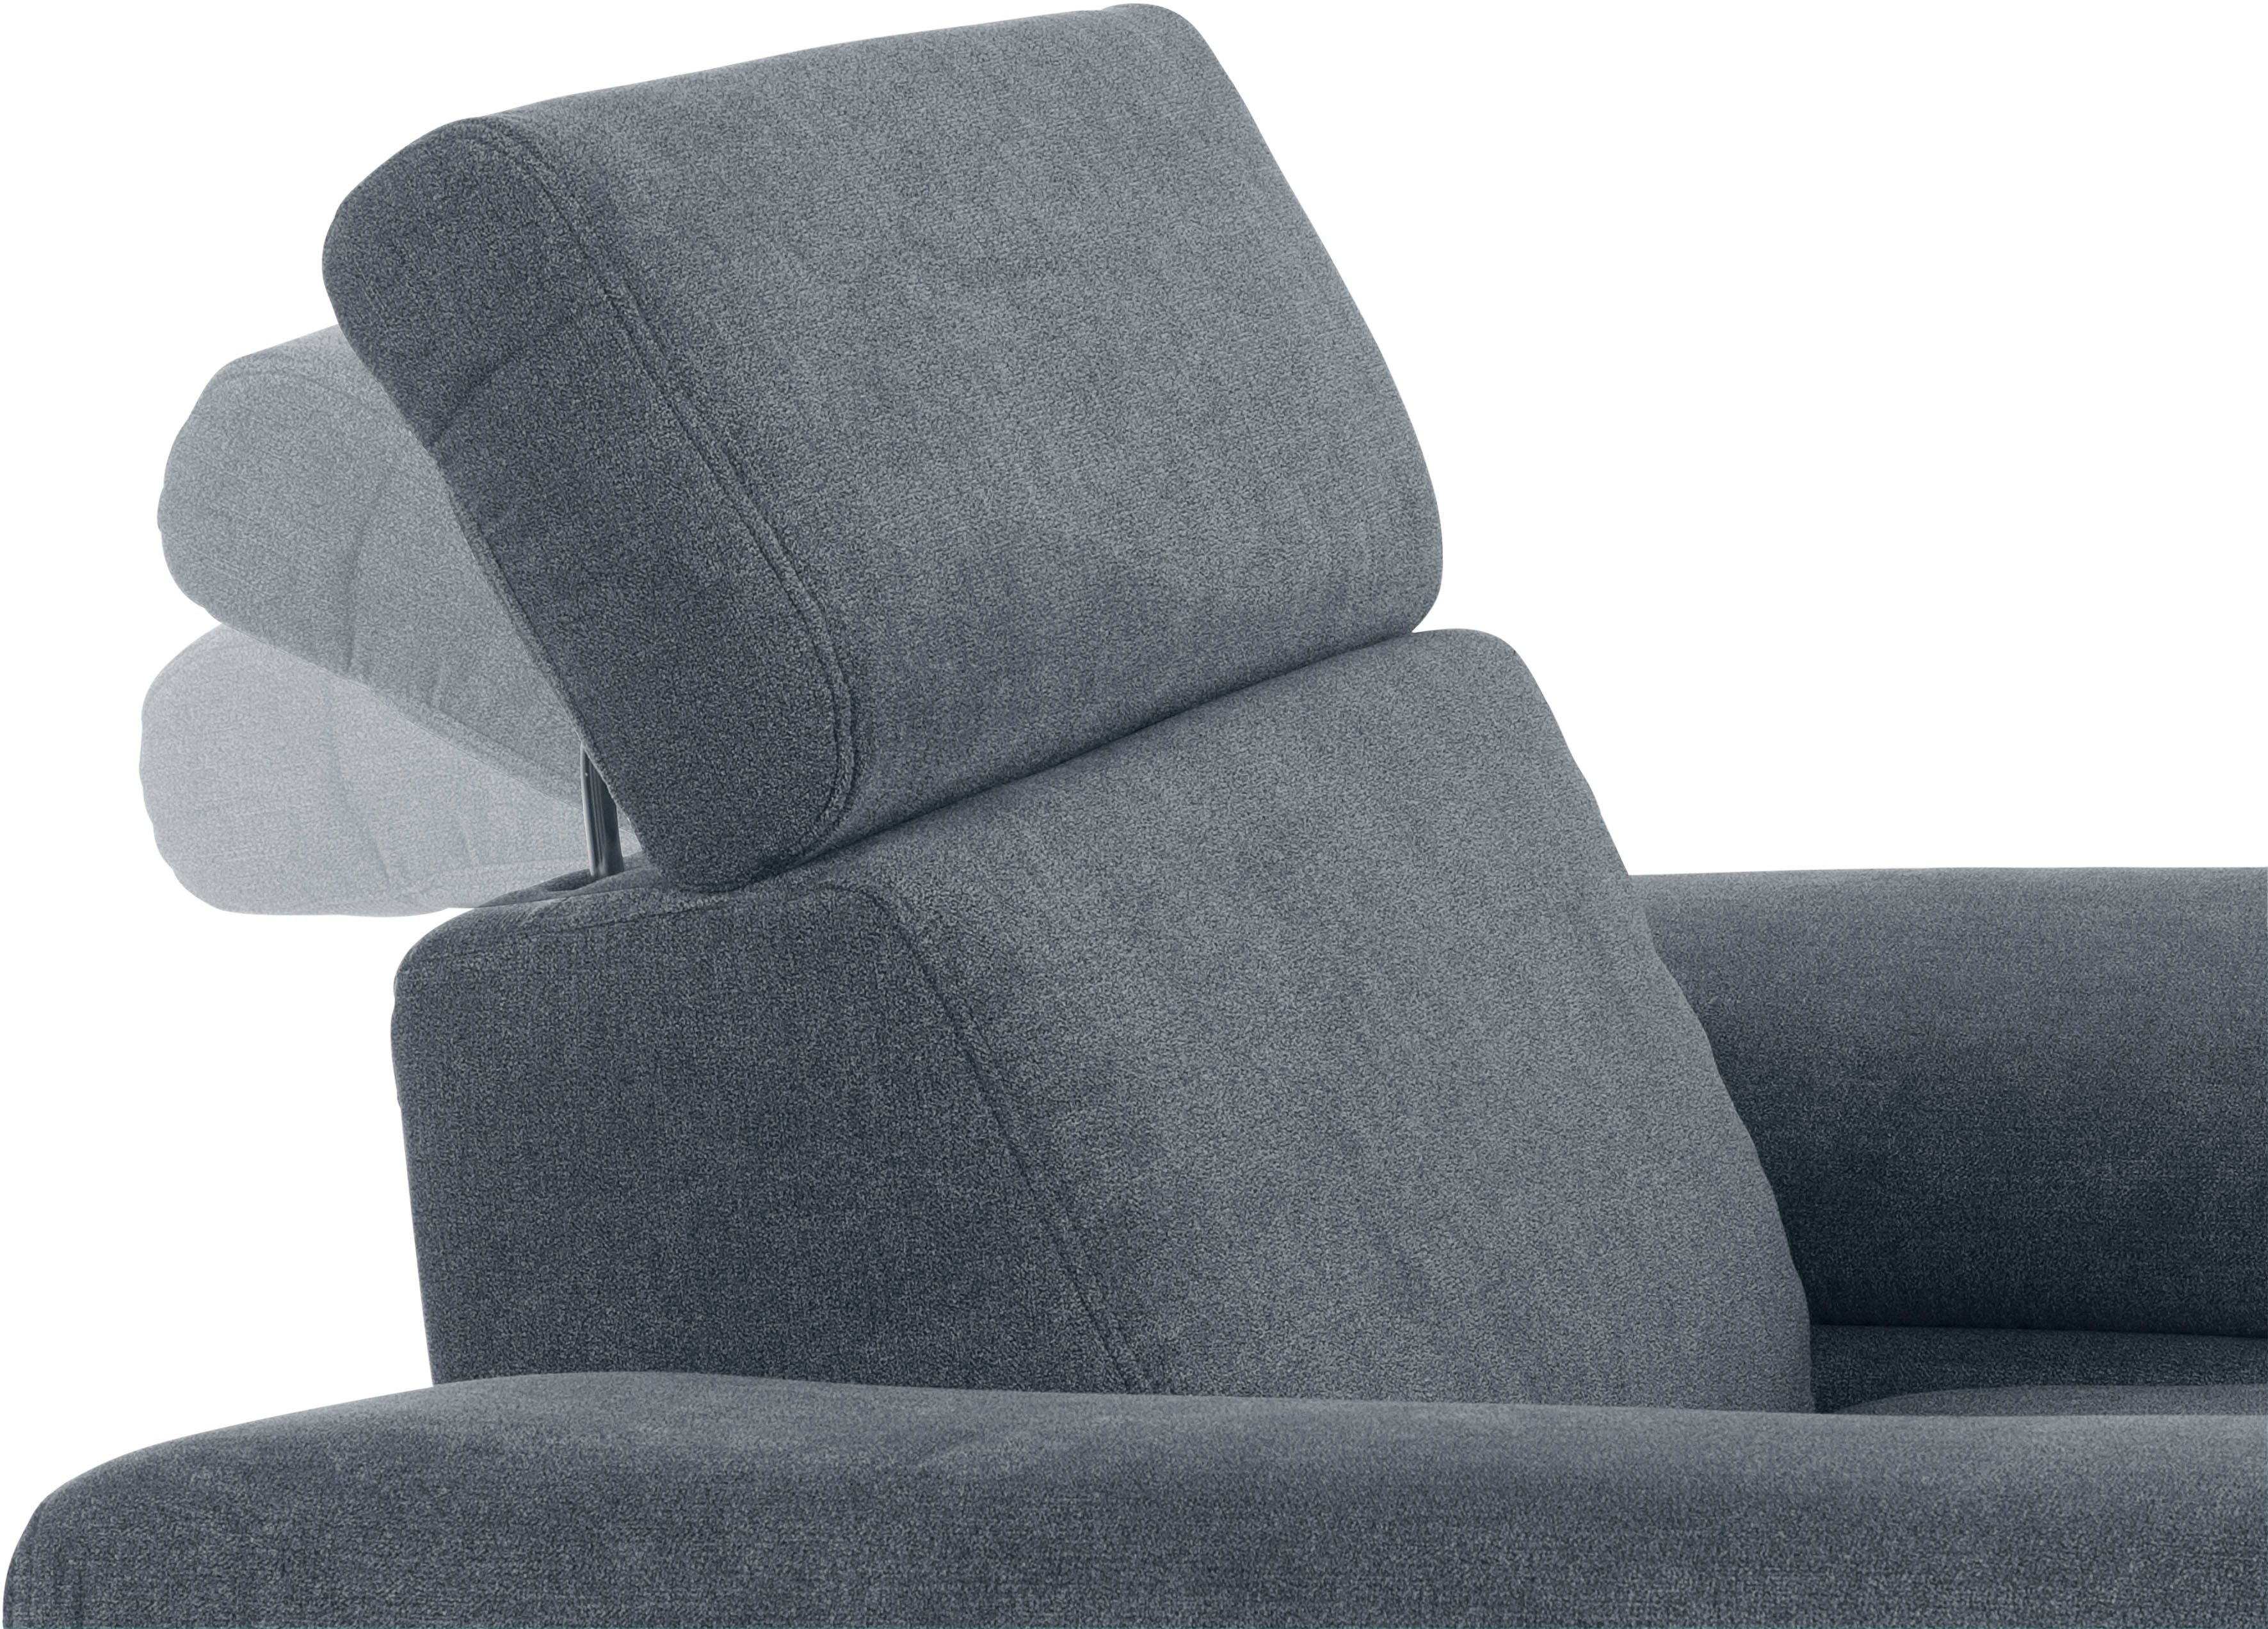 Places of Style Sessel Trapino in Luxus, Lederoptik Luxus-Microfaser Rückenverstellung, mit wahlweise